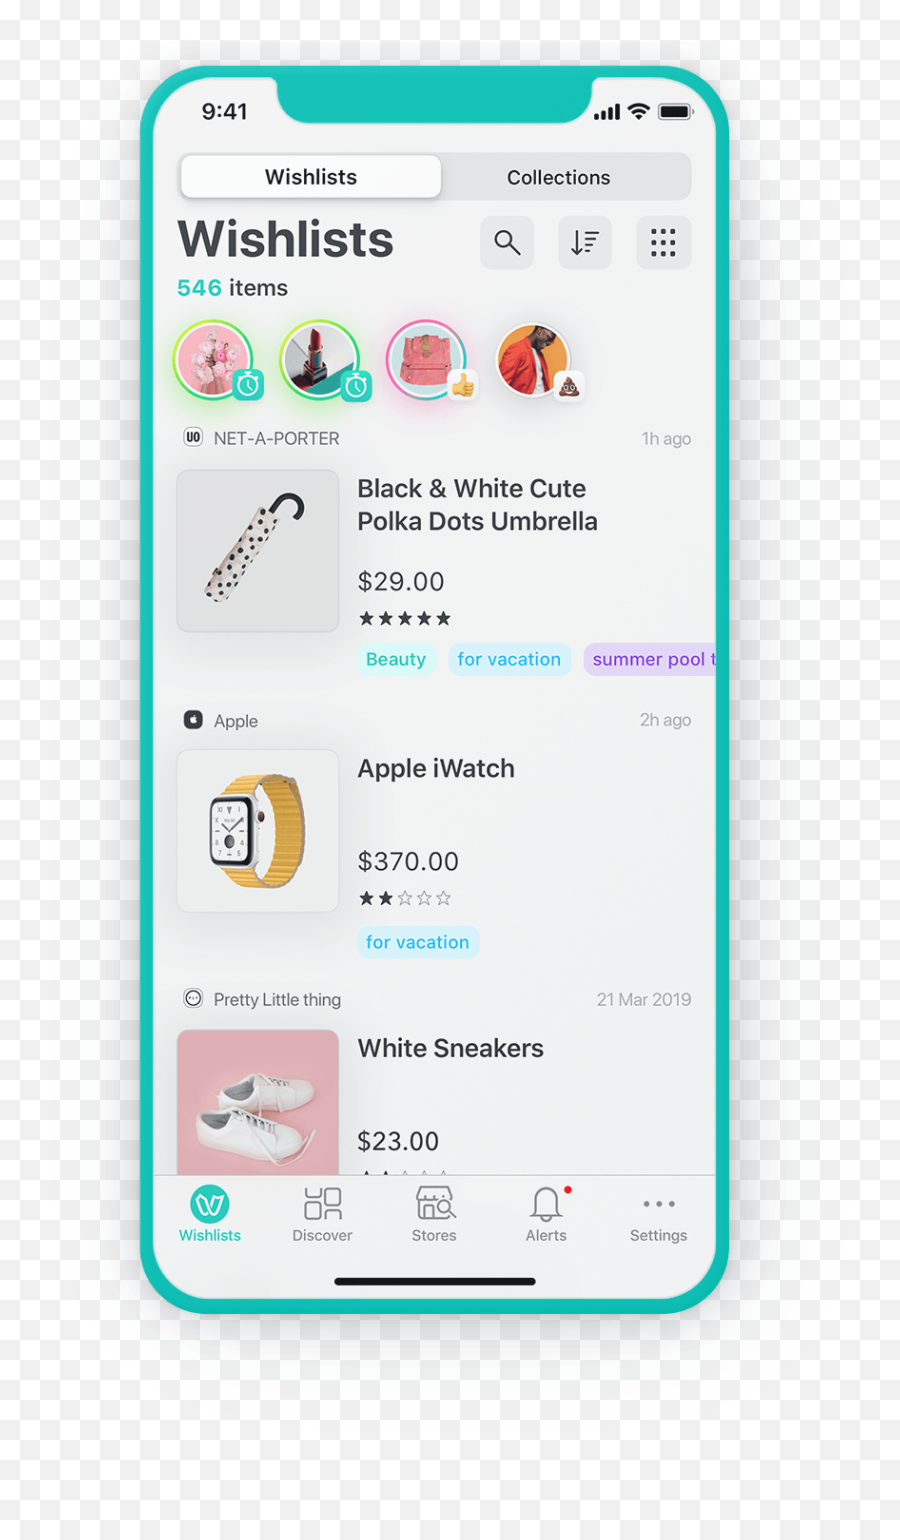 Wishupon - A Universal Shopping Wish List App Emoji,What The Motorcycle Friend Emojis Mean On Snapchat